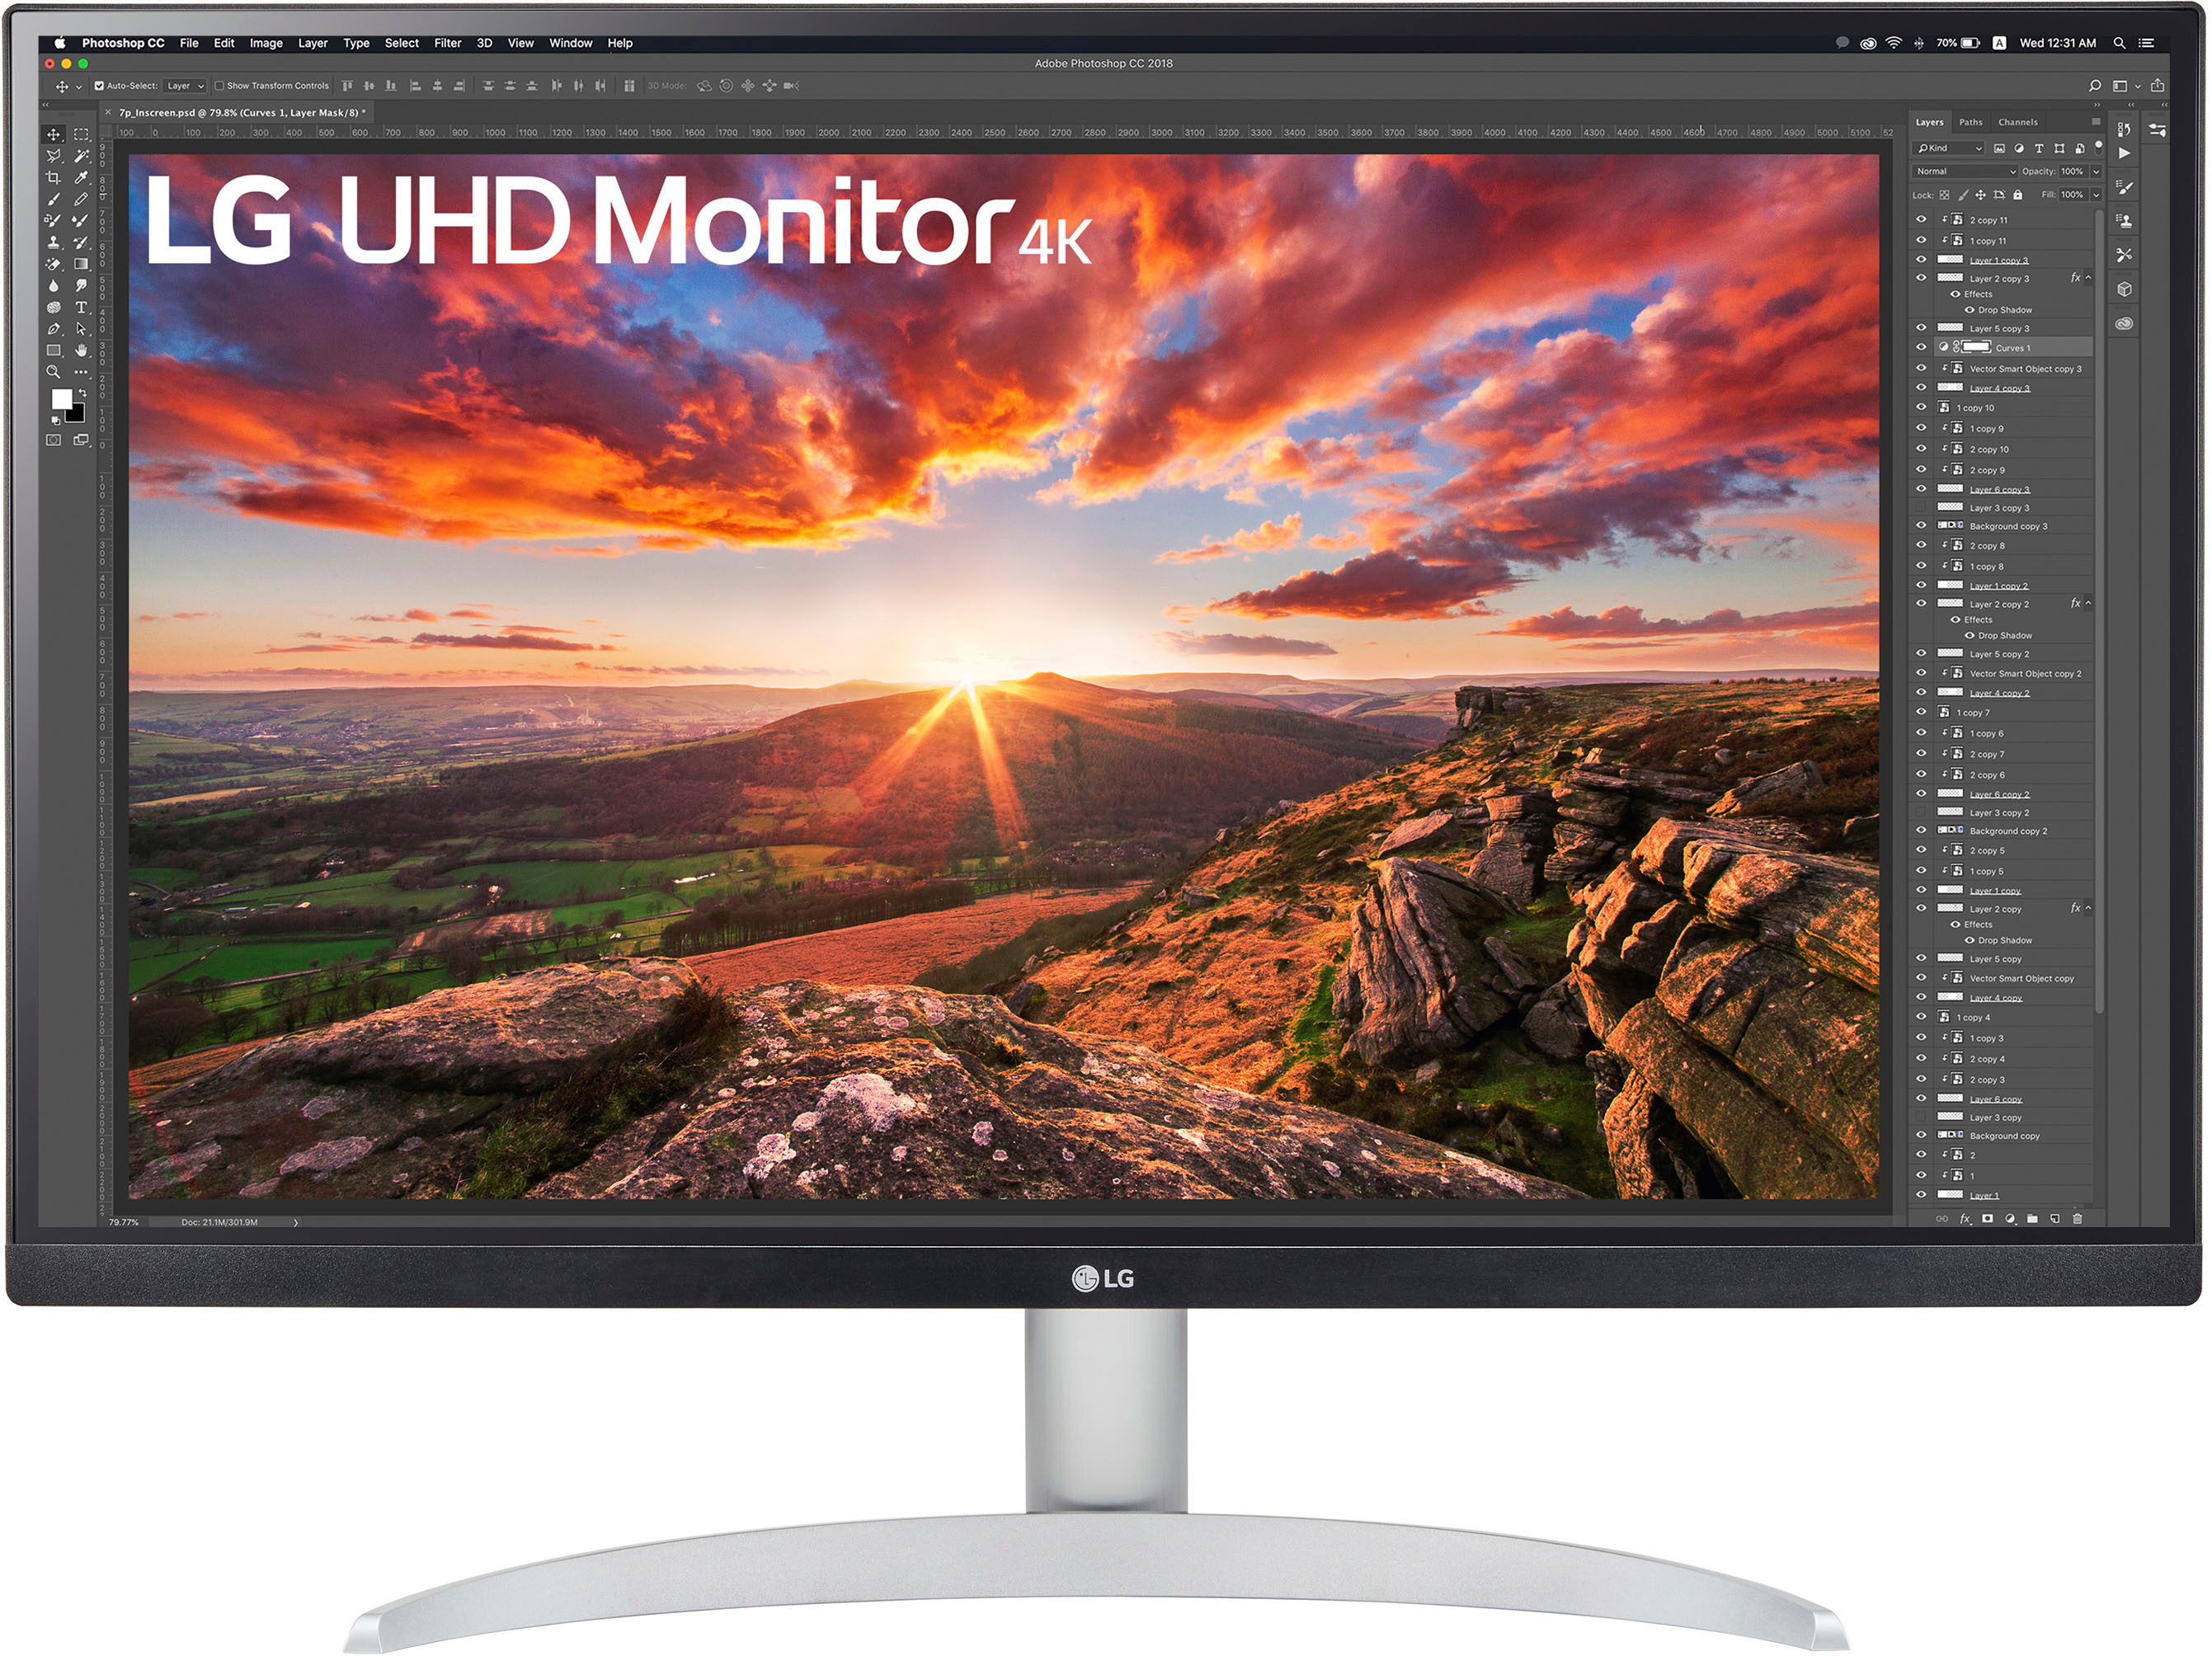 LG 27” IPS LED 4K UHD AMD FreeSync Monitor with HDR (DisplayPort 